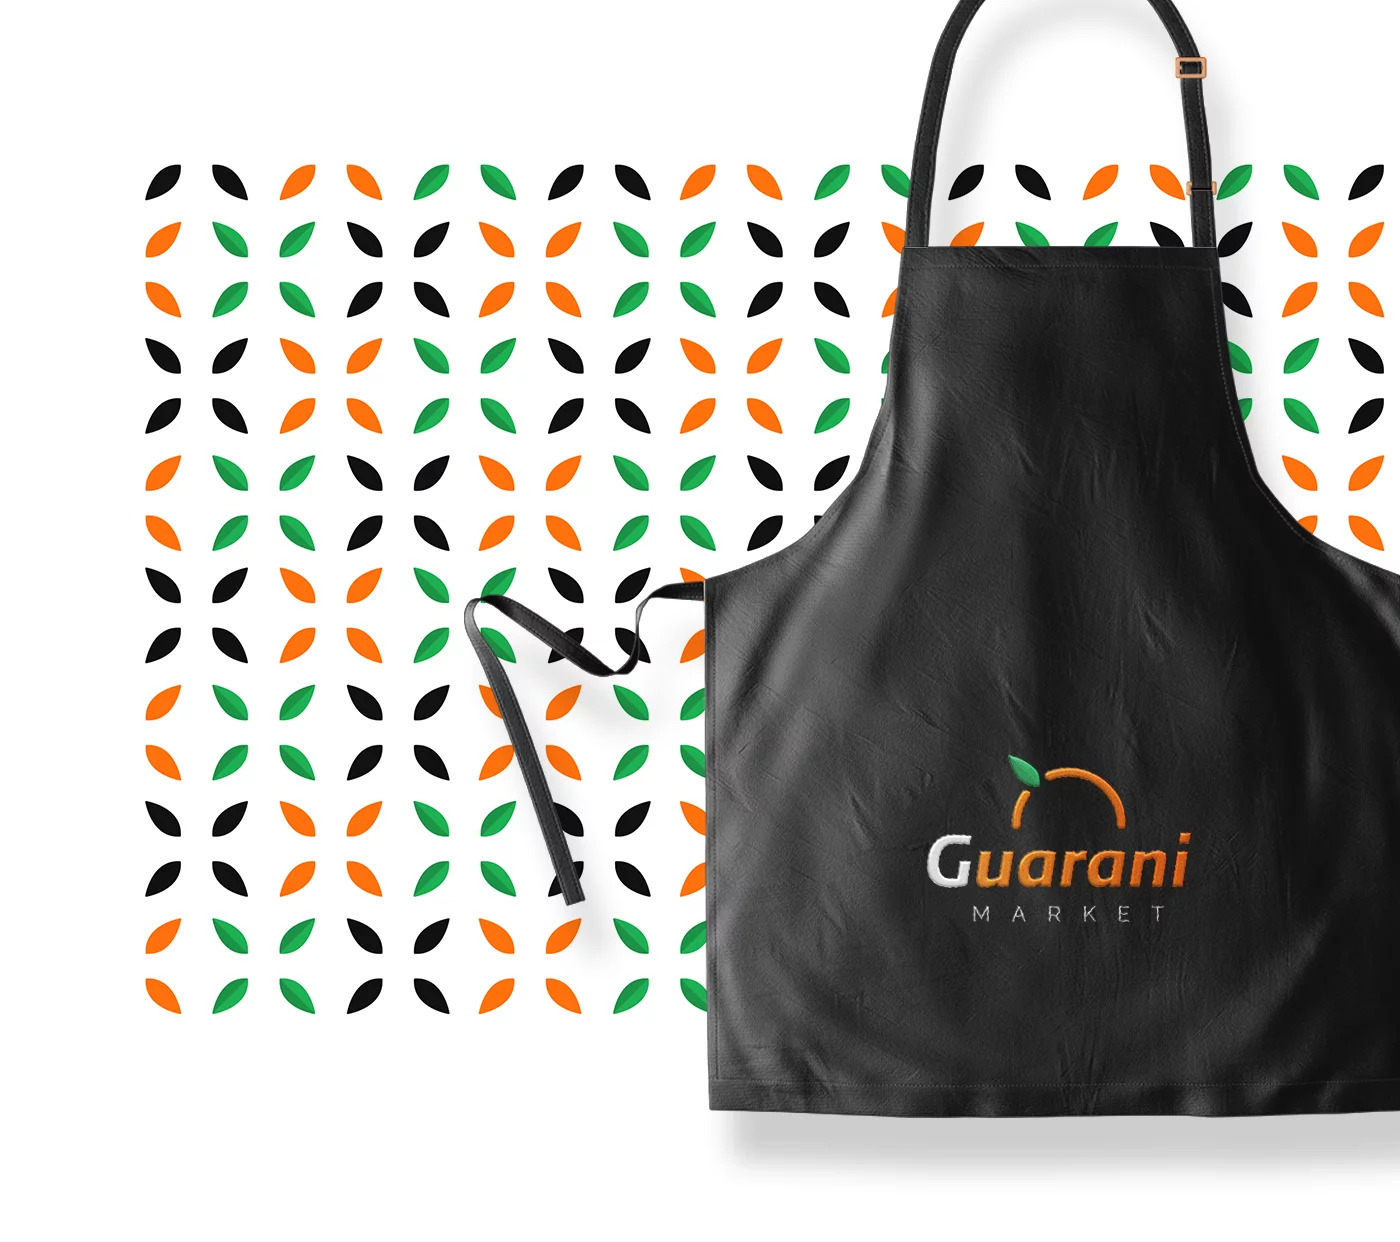 Branding Guarani Market